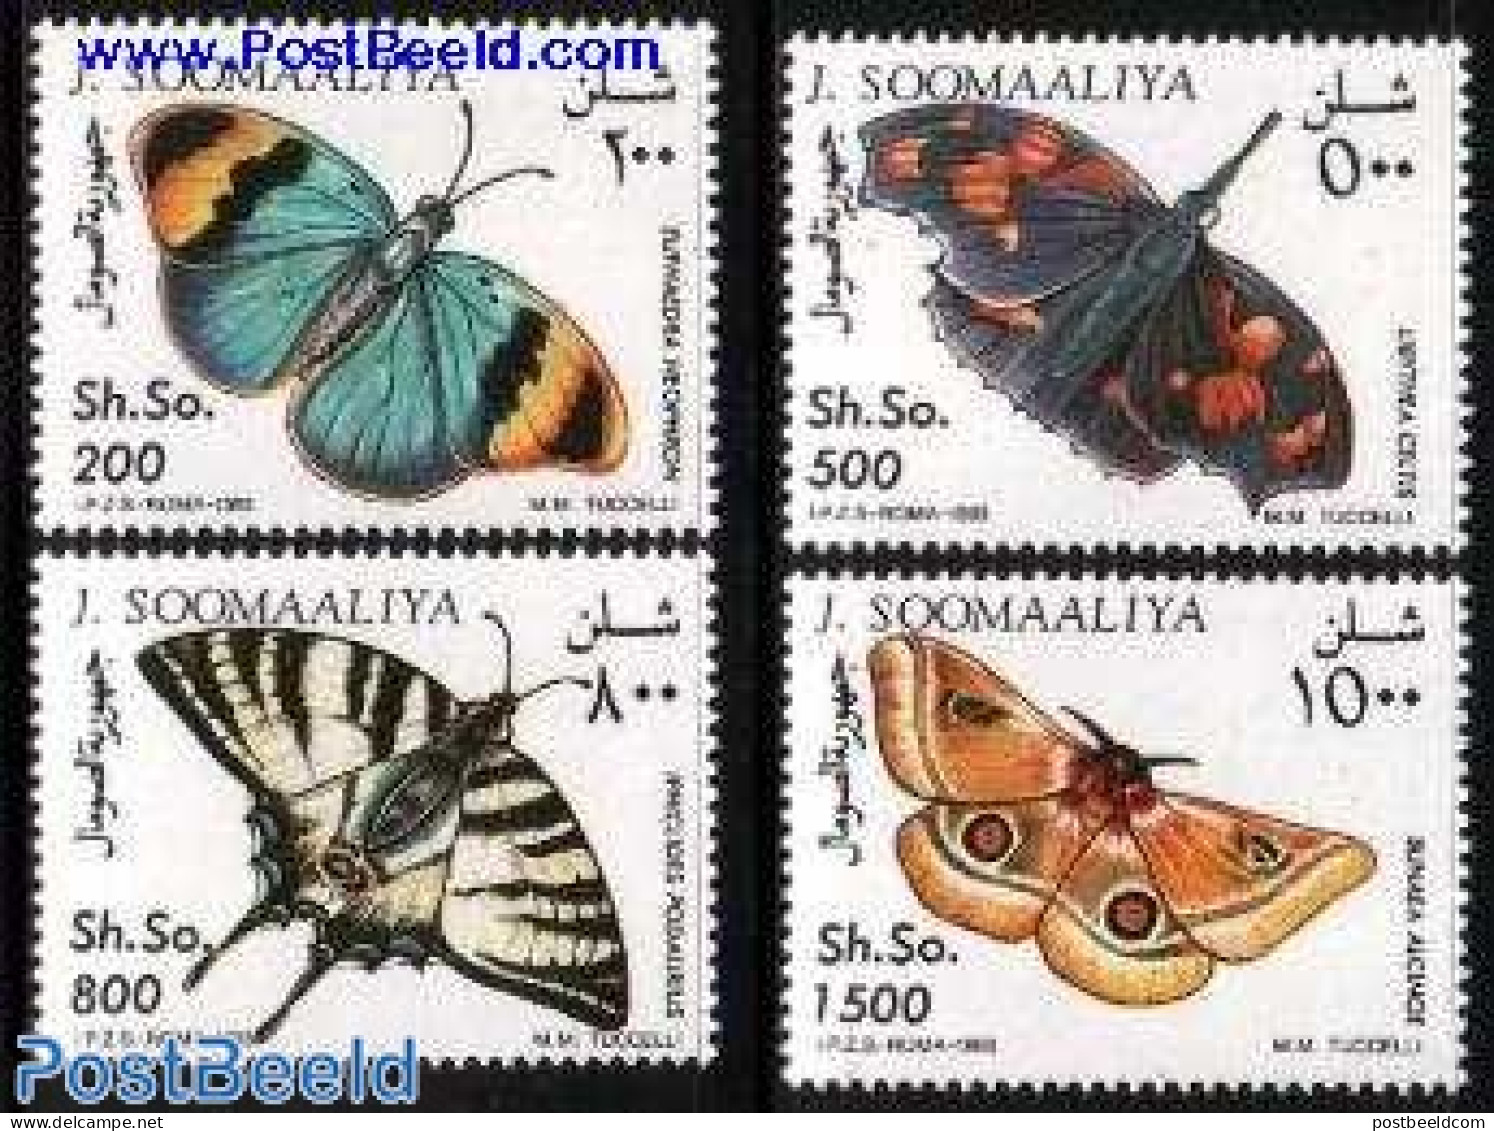 Somalia 1993 Butterflies 4v, Mint NH, Nature - Butterflies - Somalia (1960-...)